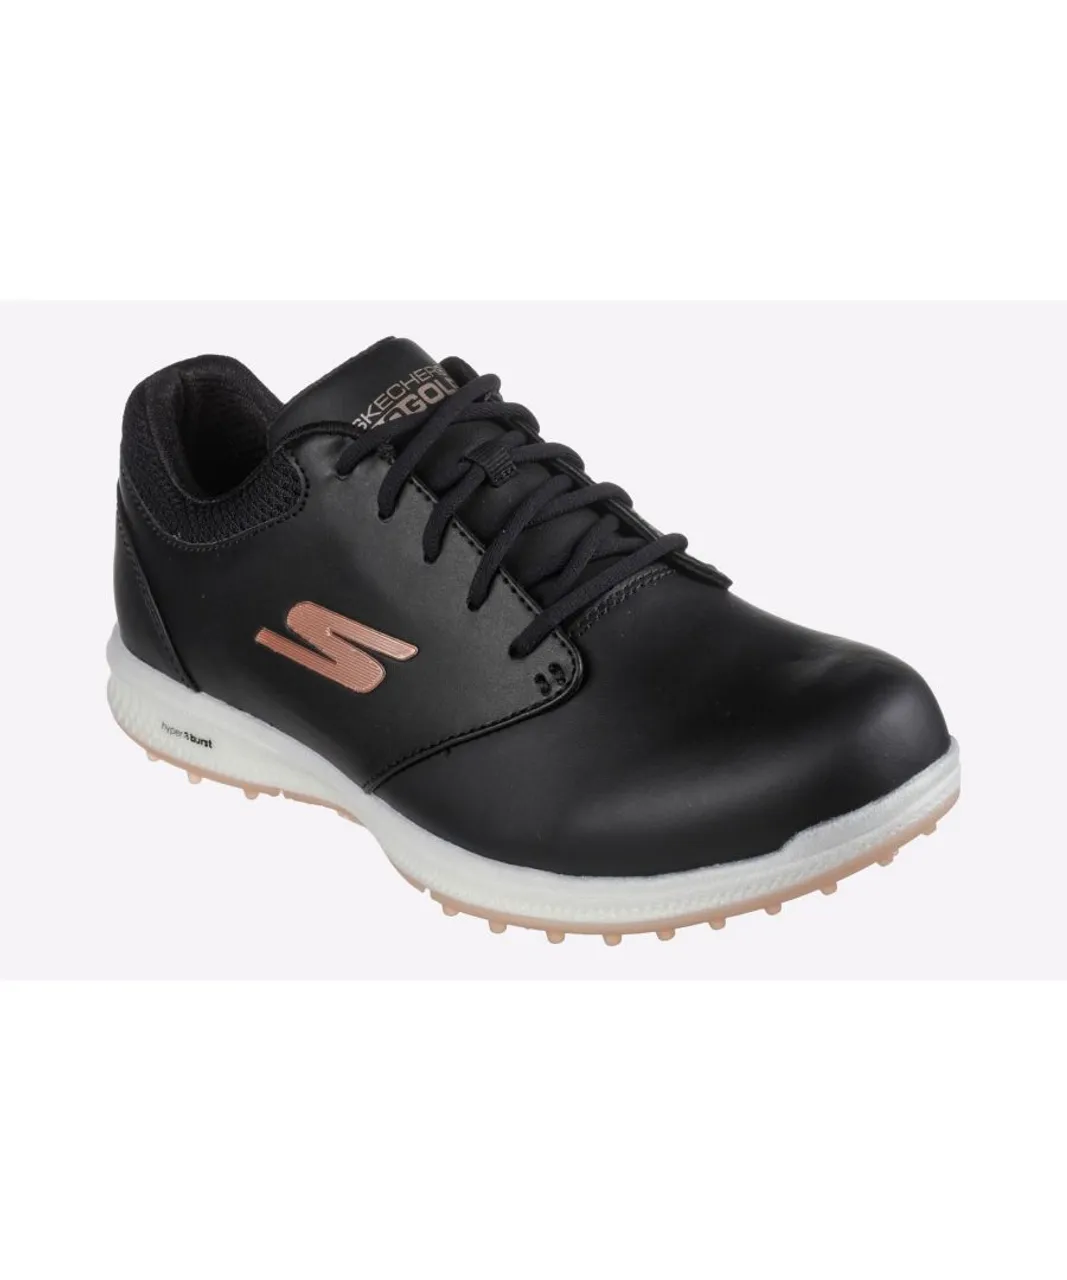 Skechers Go Golf Elite 4 Hyper WATERPROOF Shoes Womens - Black